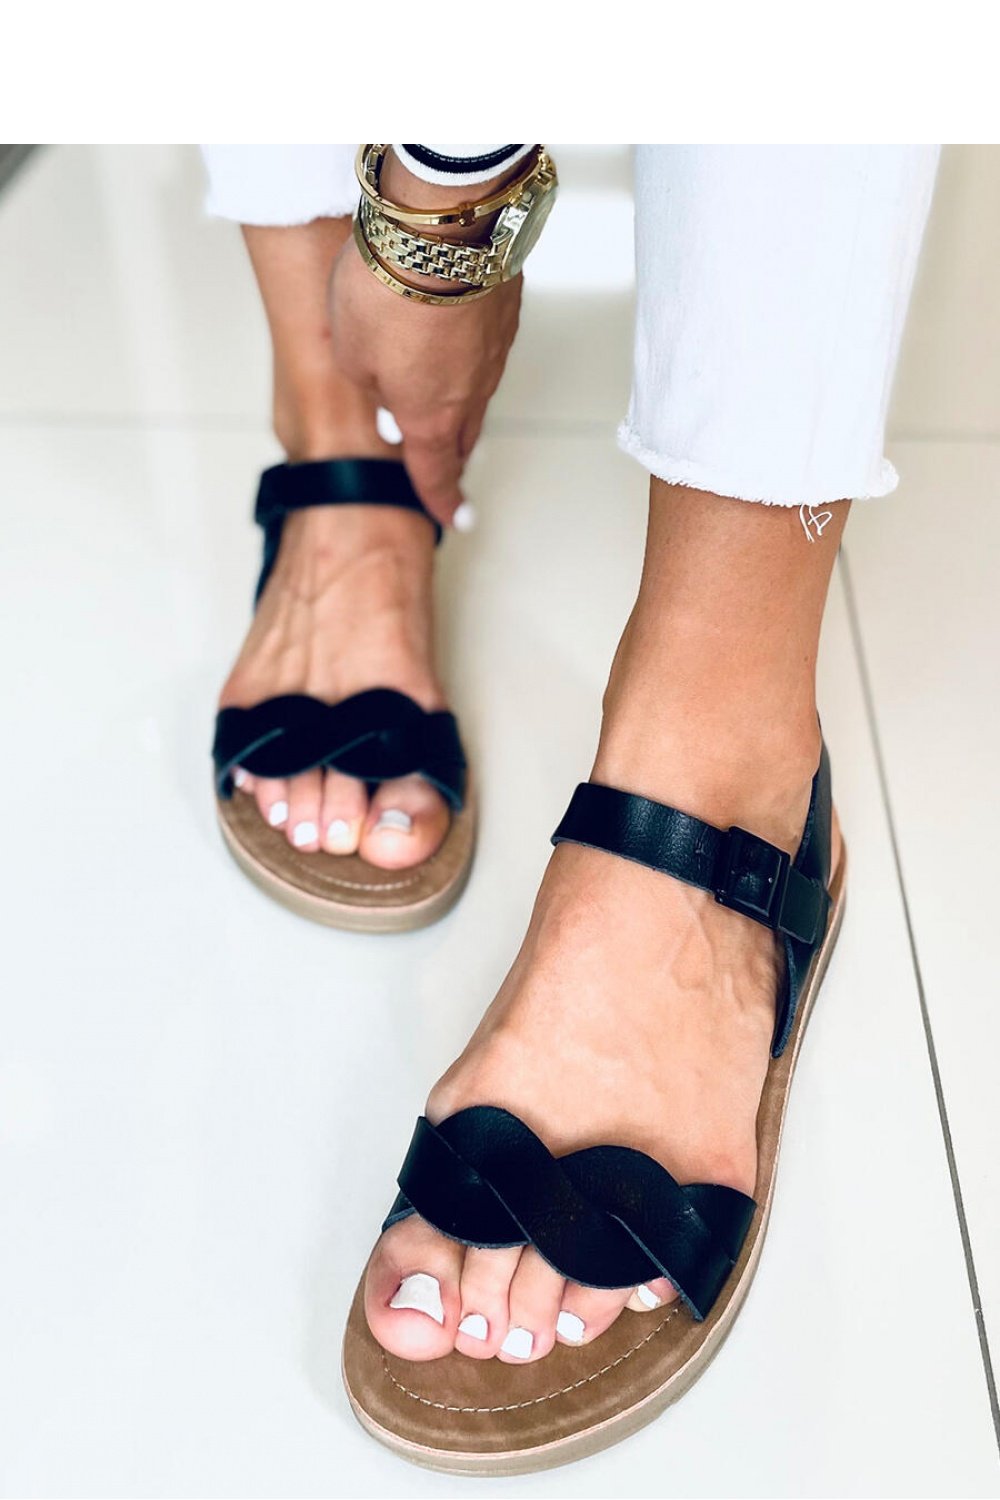 Sandals model 166577 Inello Posh Styles Apparel